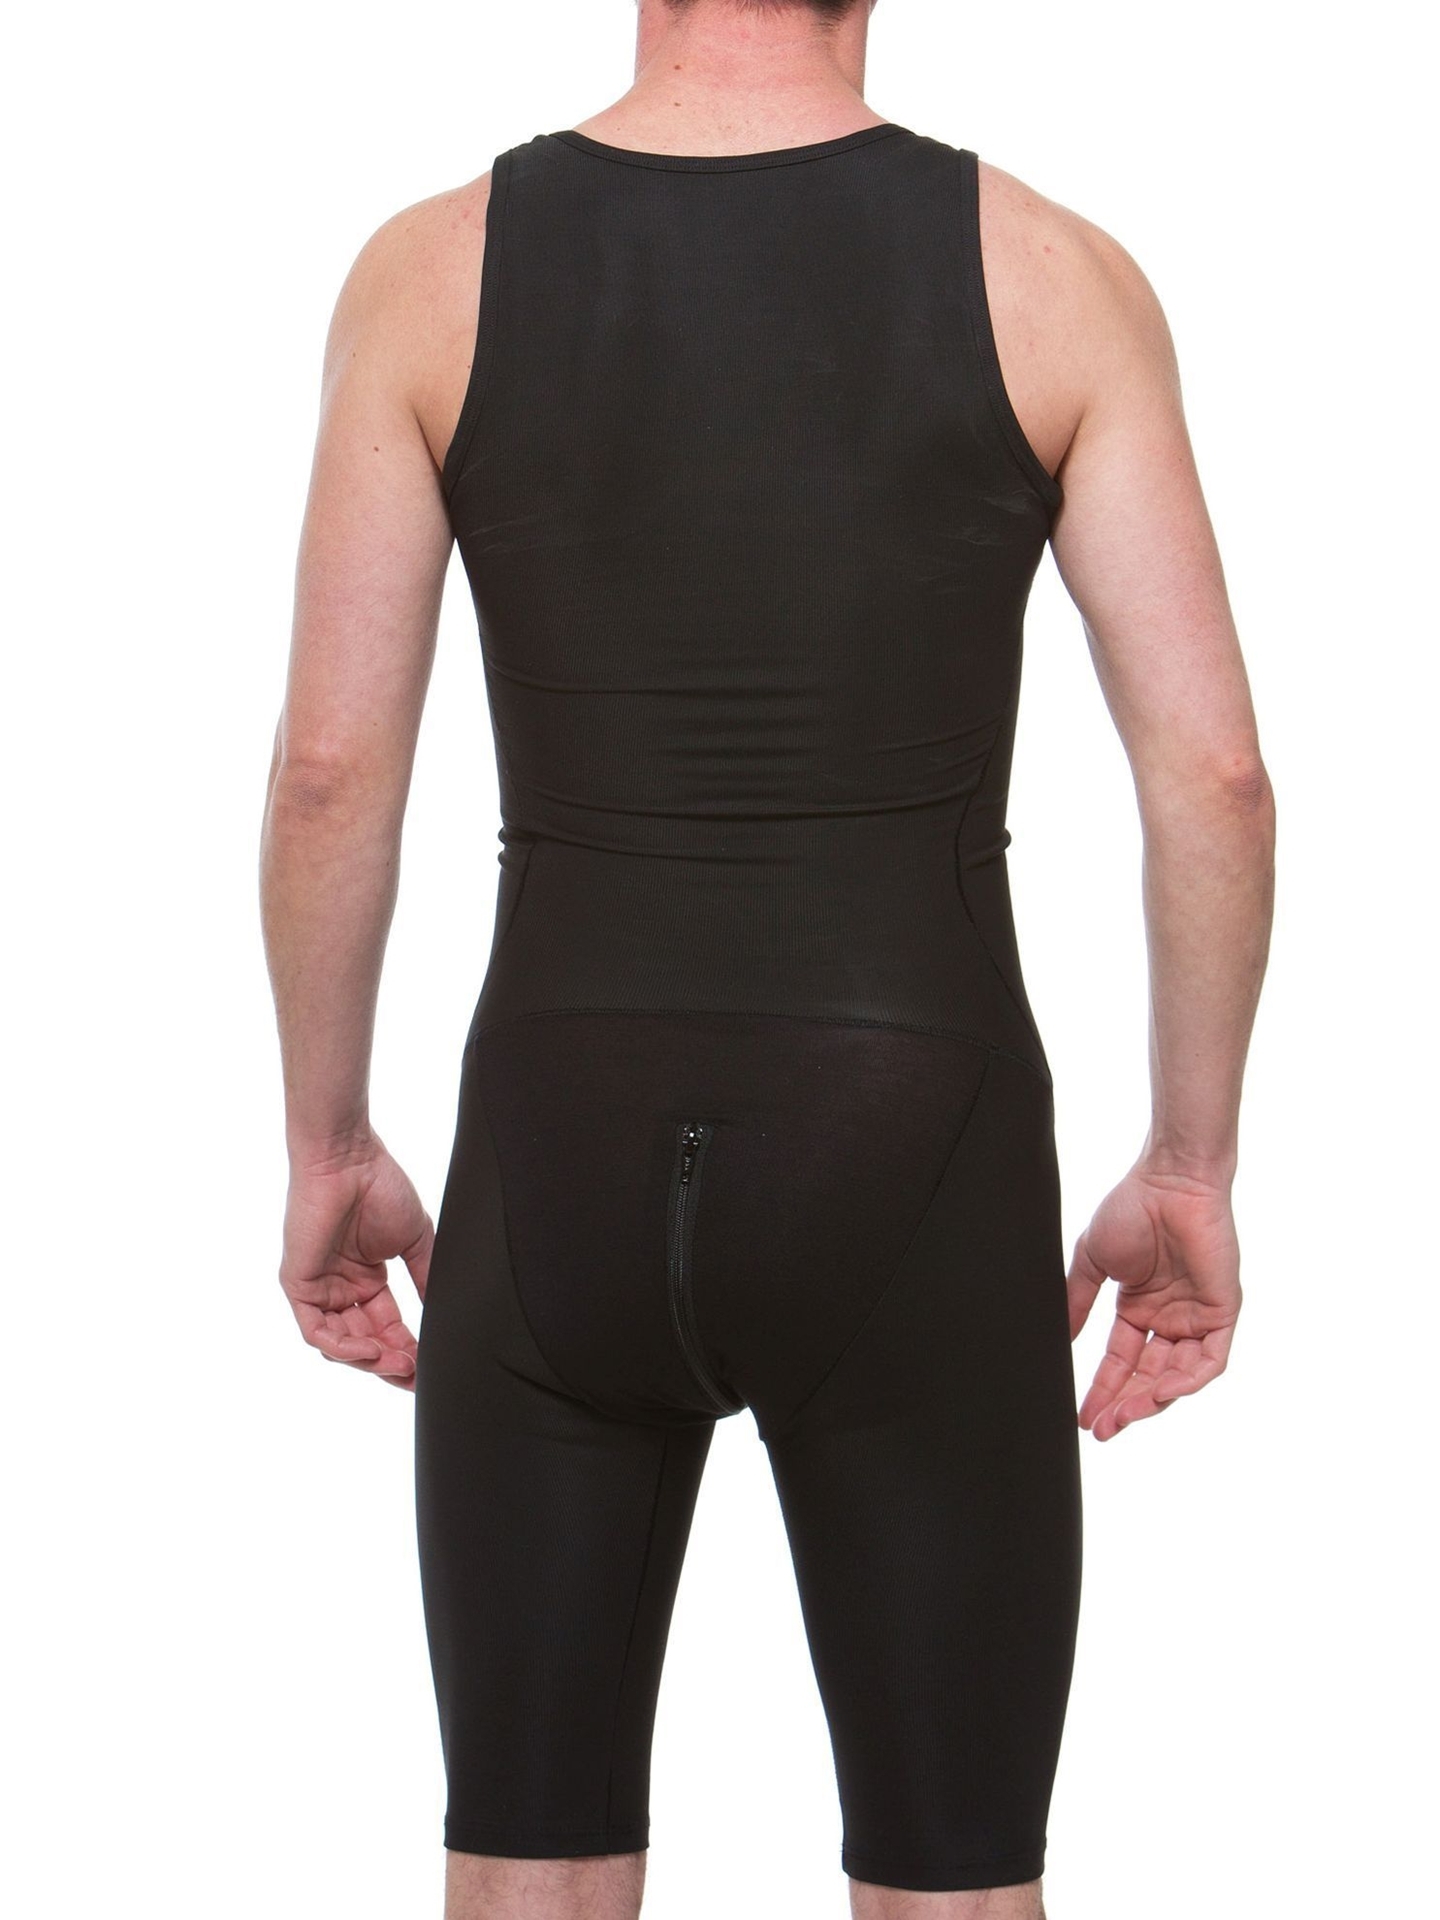 Compression Bodysuit for Trans Men. FTM Chest Binders for Trans Men by  Underworks